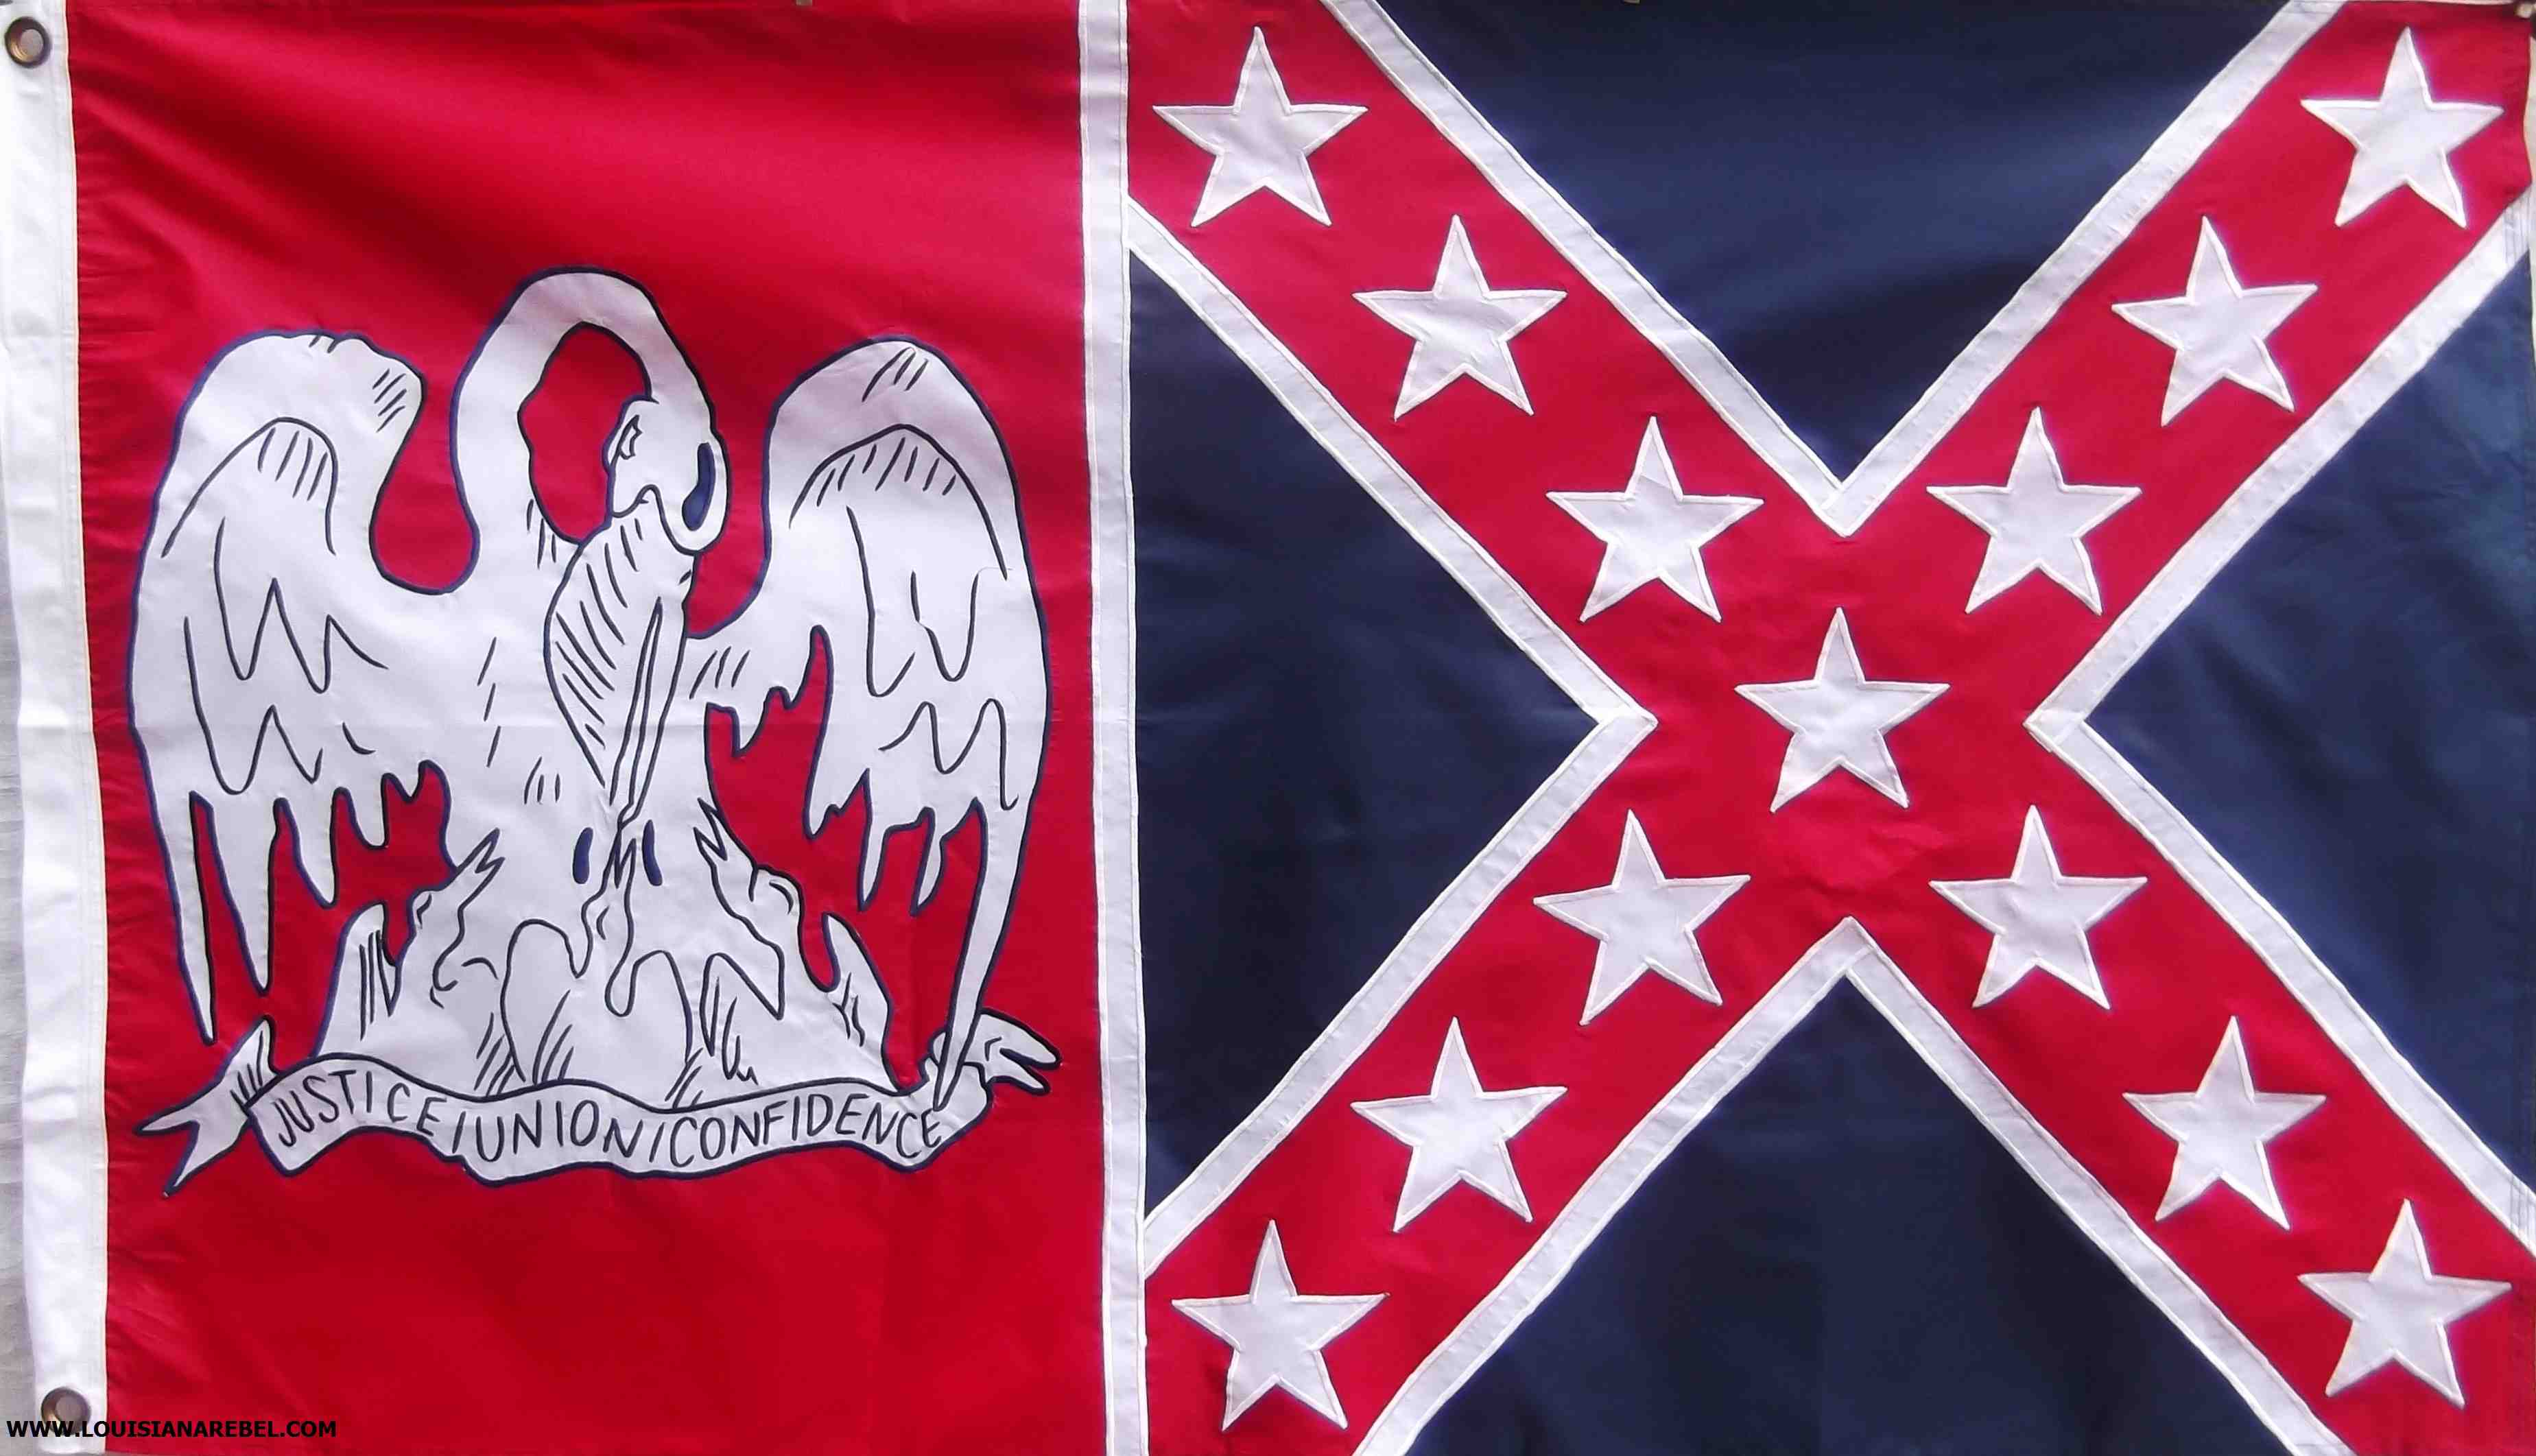 Nylon louisiana division confederate flag. 